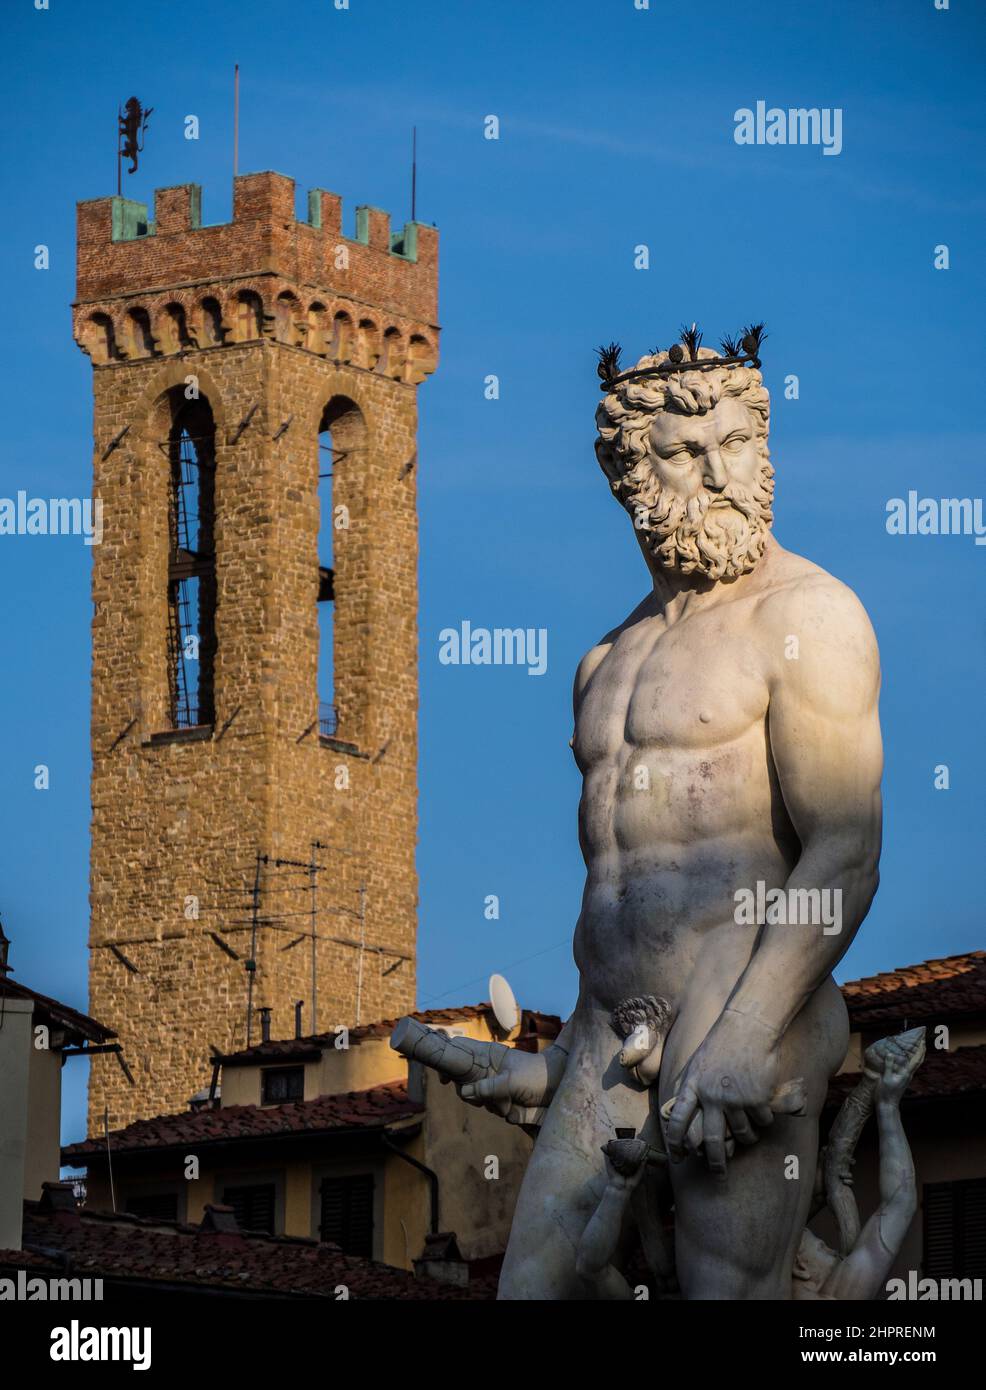 Italy, Florence, The Fountain of Neptune at Piazza della Signoria in front of the Palazzo Vecchio Stock Photo